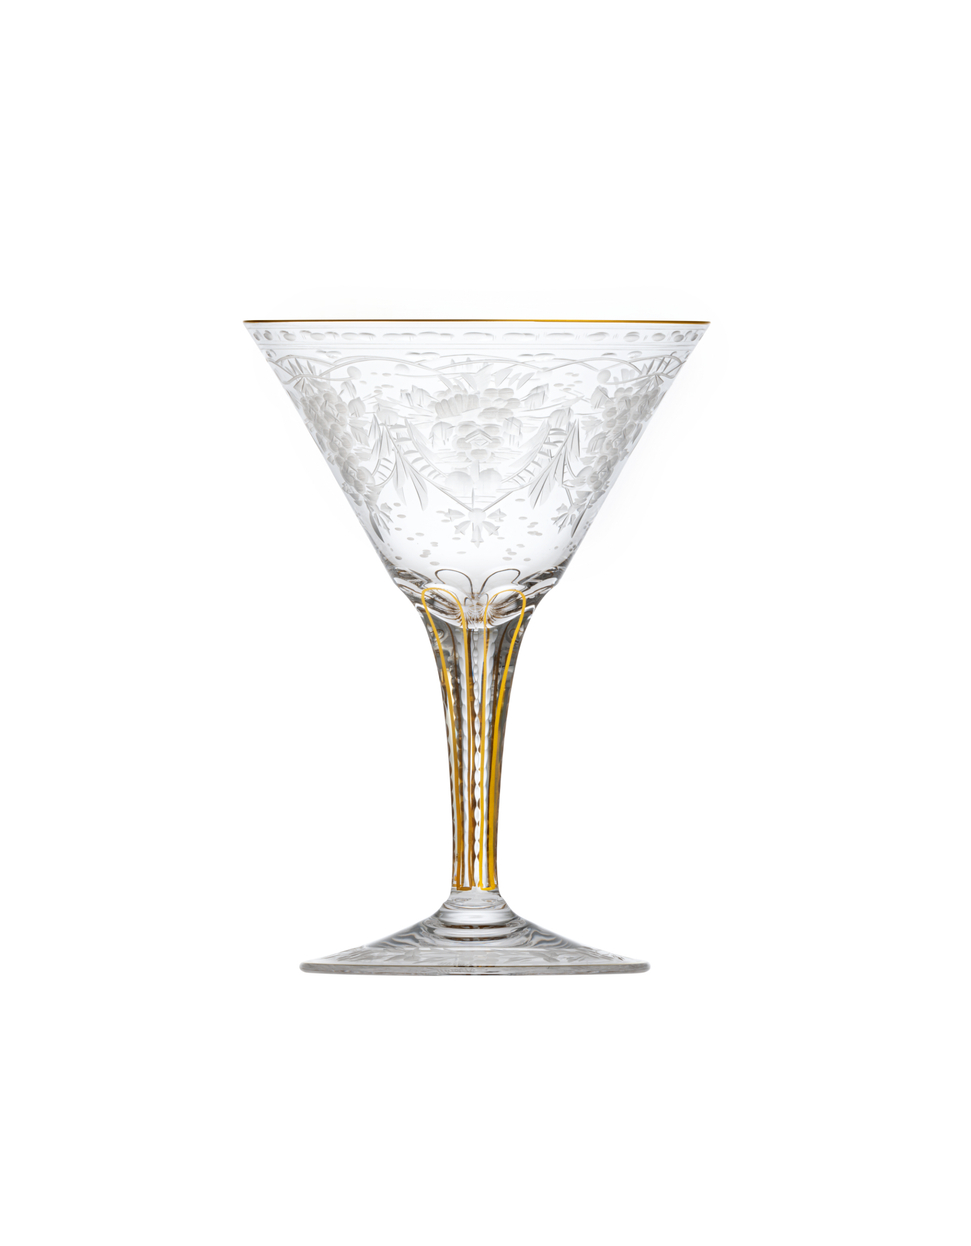 Maharani sklenka na martini, 150 ml